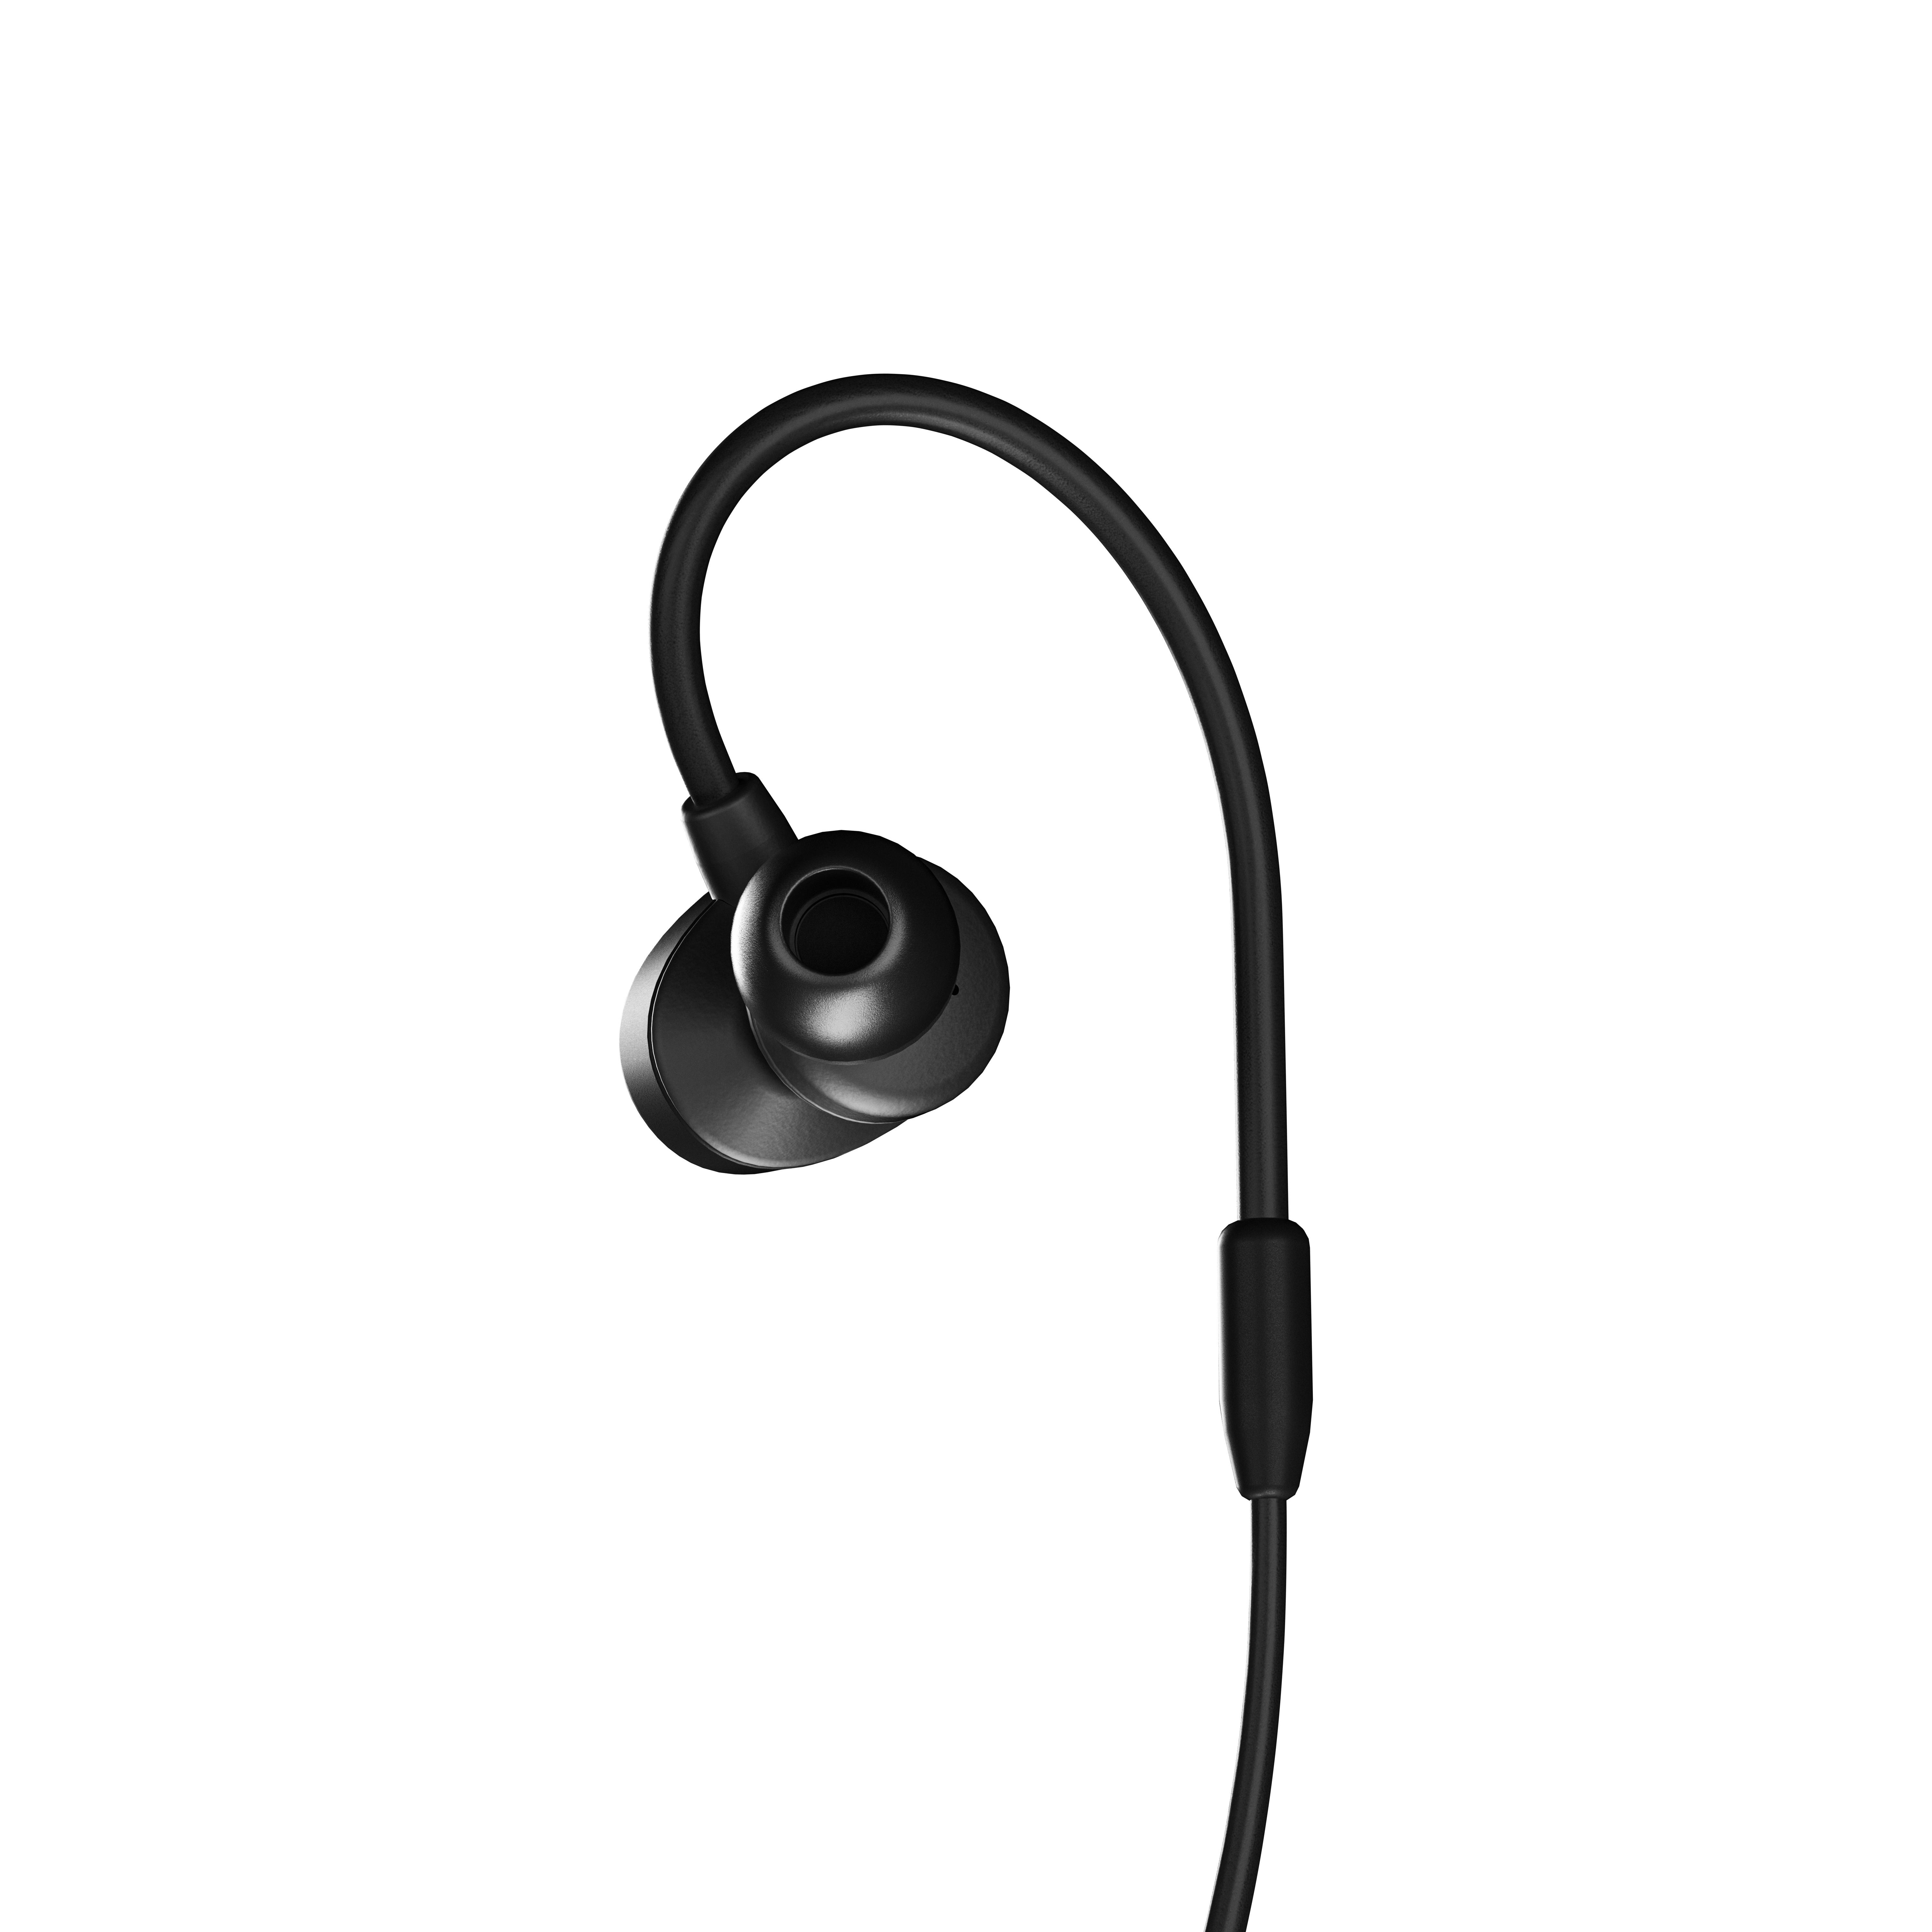 Kopfhörer - TUSQ STEELSERIES In-ear Schwarz Gaming-Headset, Mobiles